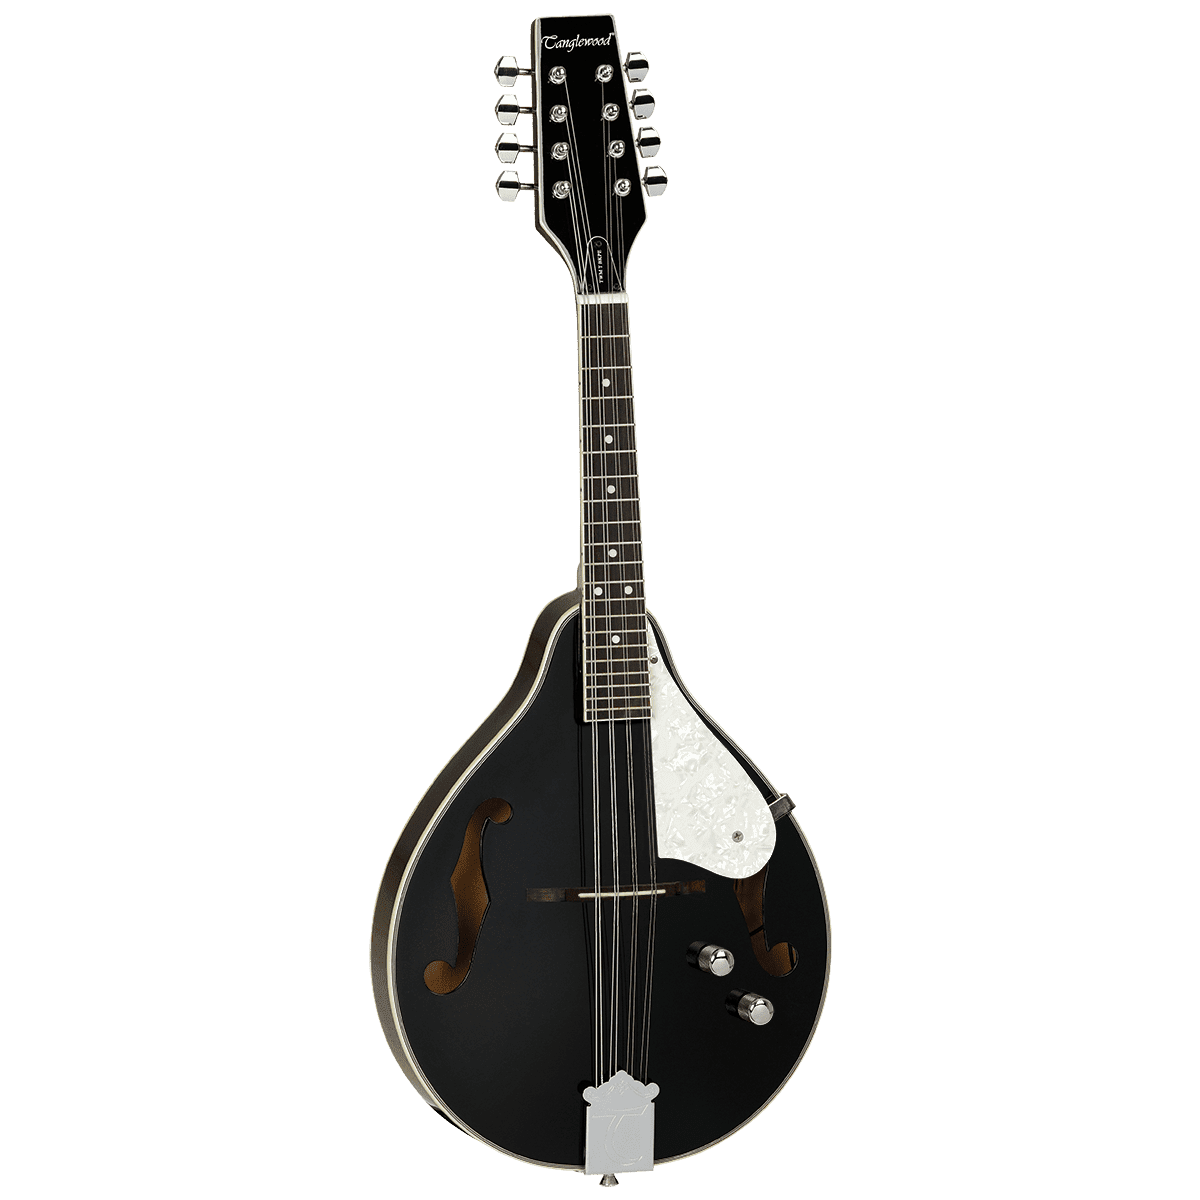 Union Series Mandolin Black With Pickup